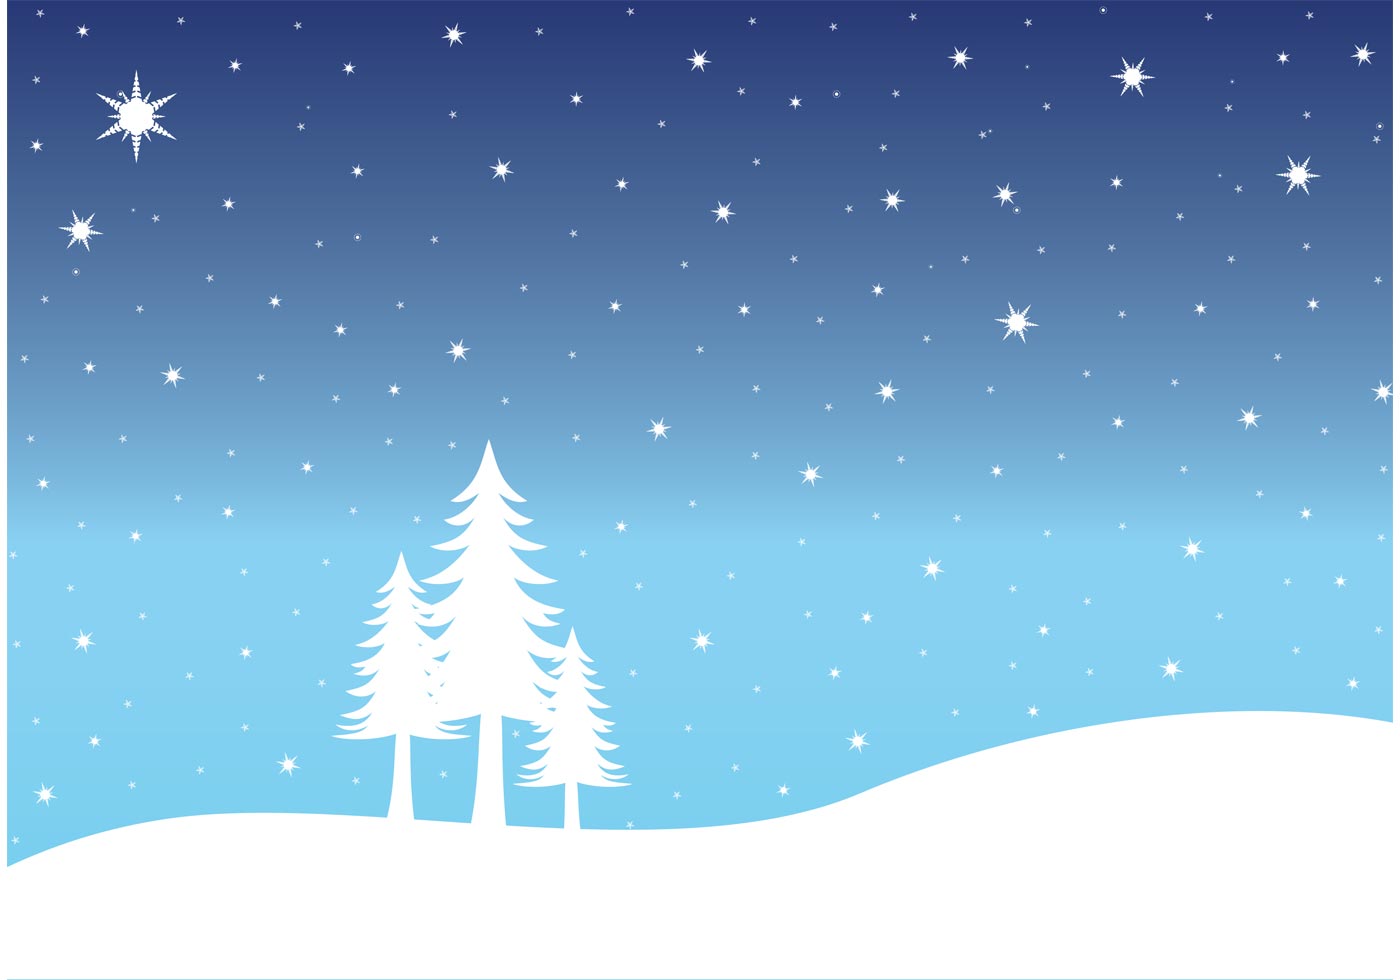 Download Snow Landscape - Download Free Vector Art, Stock Graphics ...